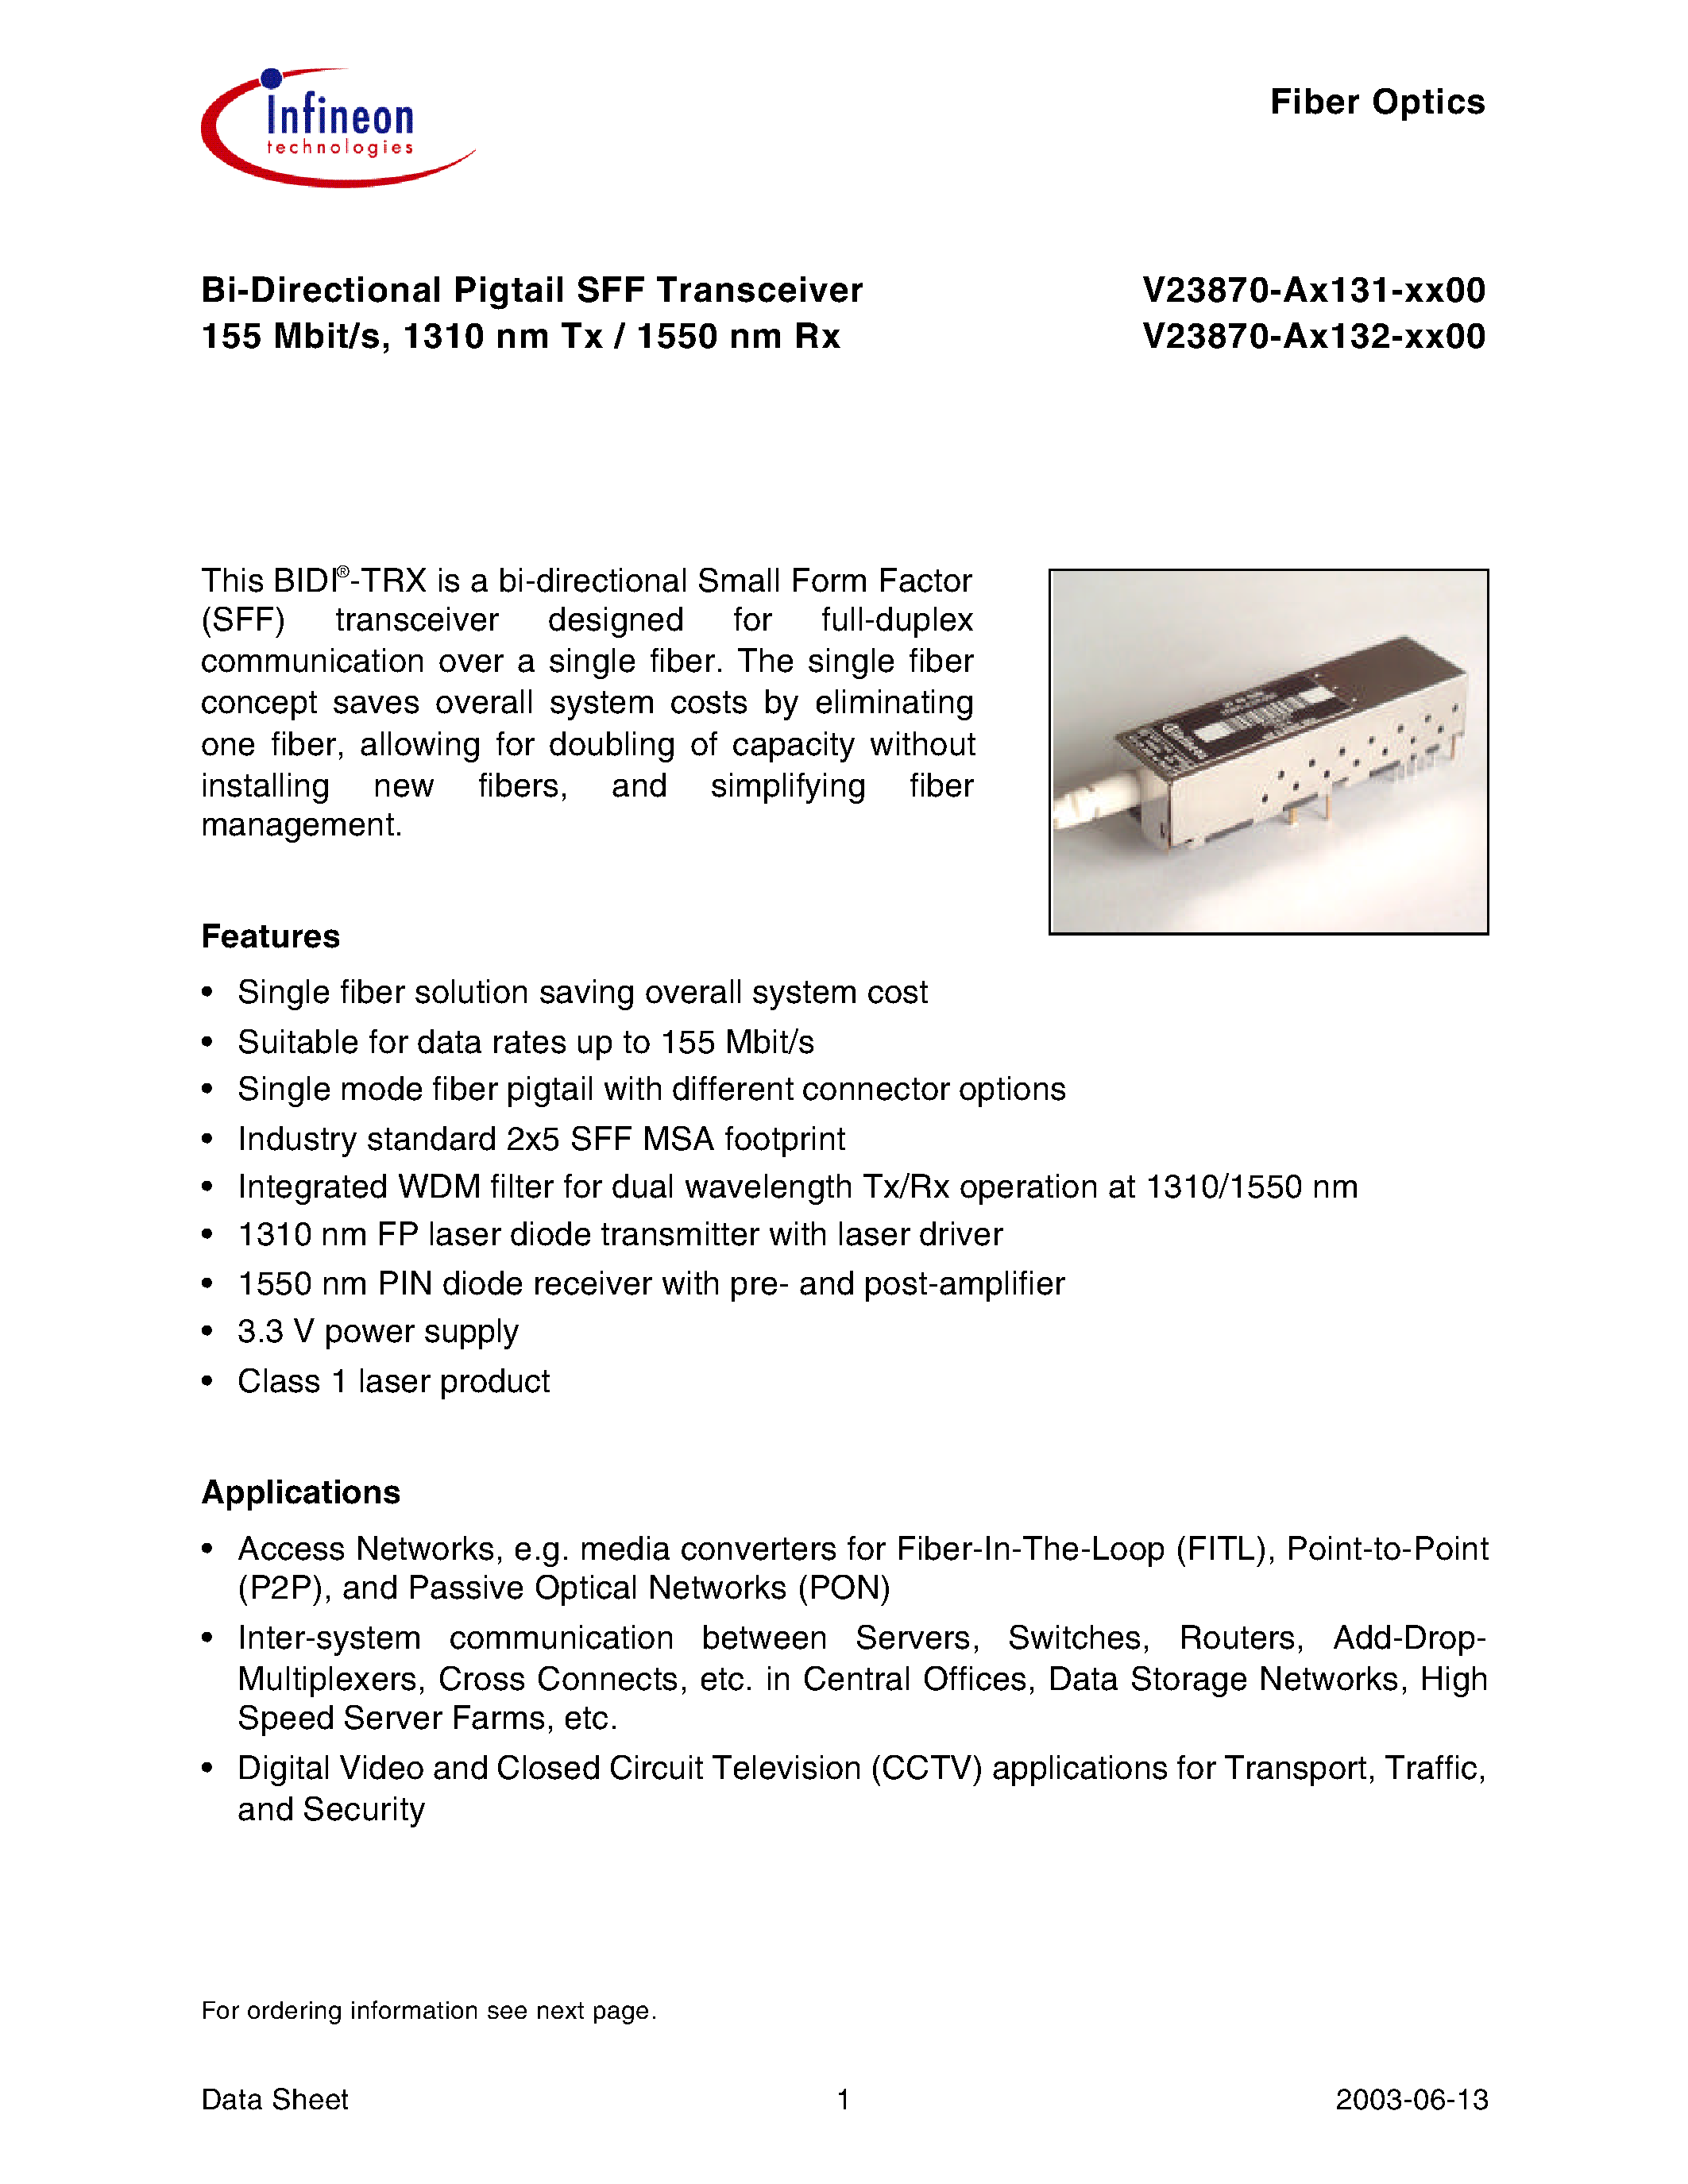 Даташит V23870-A3132-K500 - Bi-Directional Pigtail SFF Transceiver 155 Mbit/s/ 1310 nm Tx / 1550 nm Rx страница 1